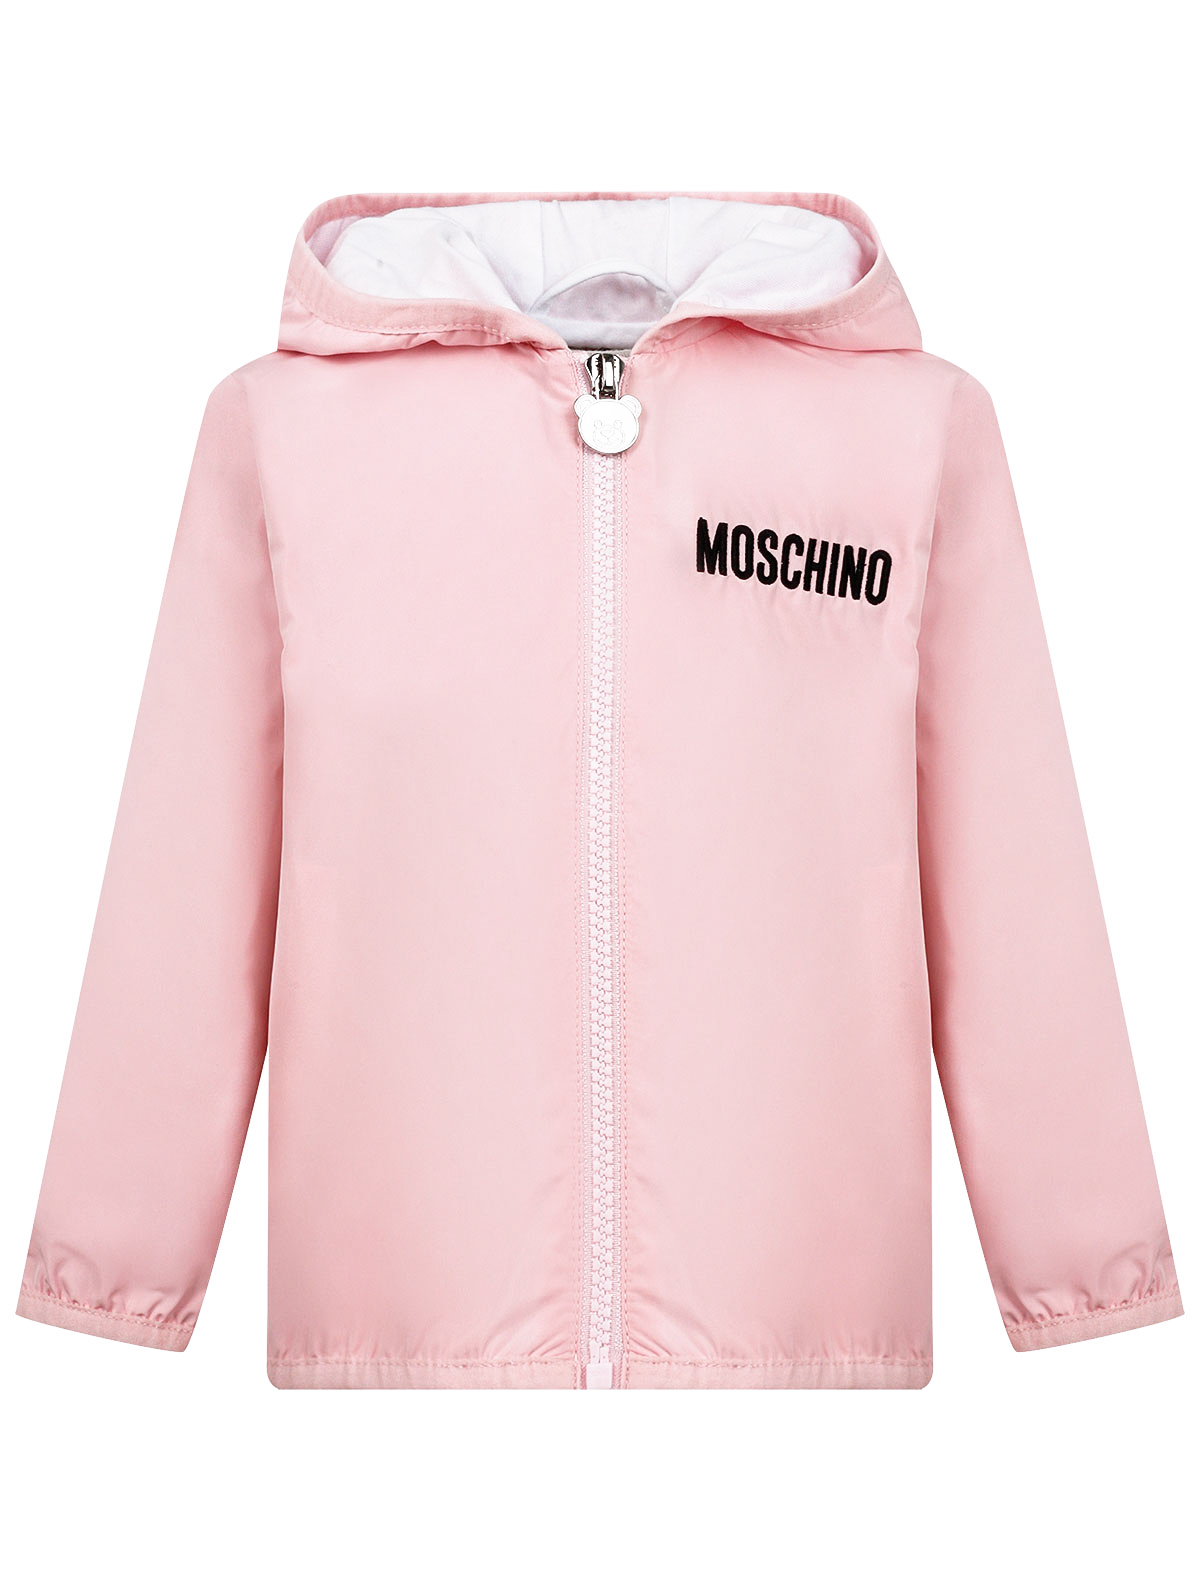 Куртка Moschino 2396251, цвет розовый, размер 3 1074509270447 - фото 1